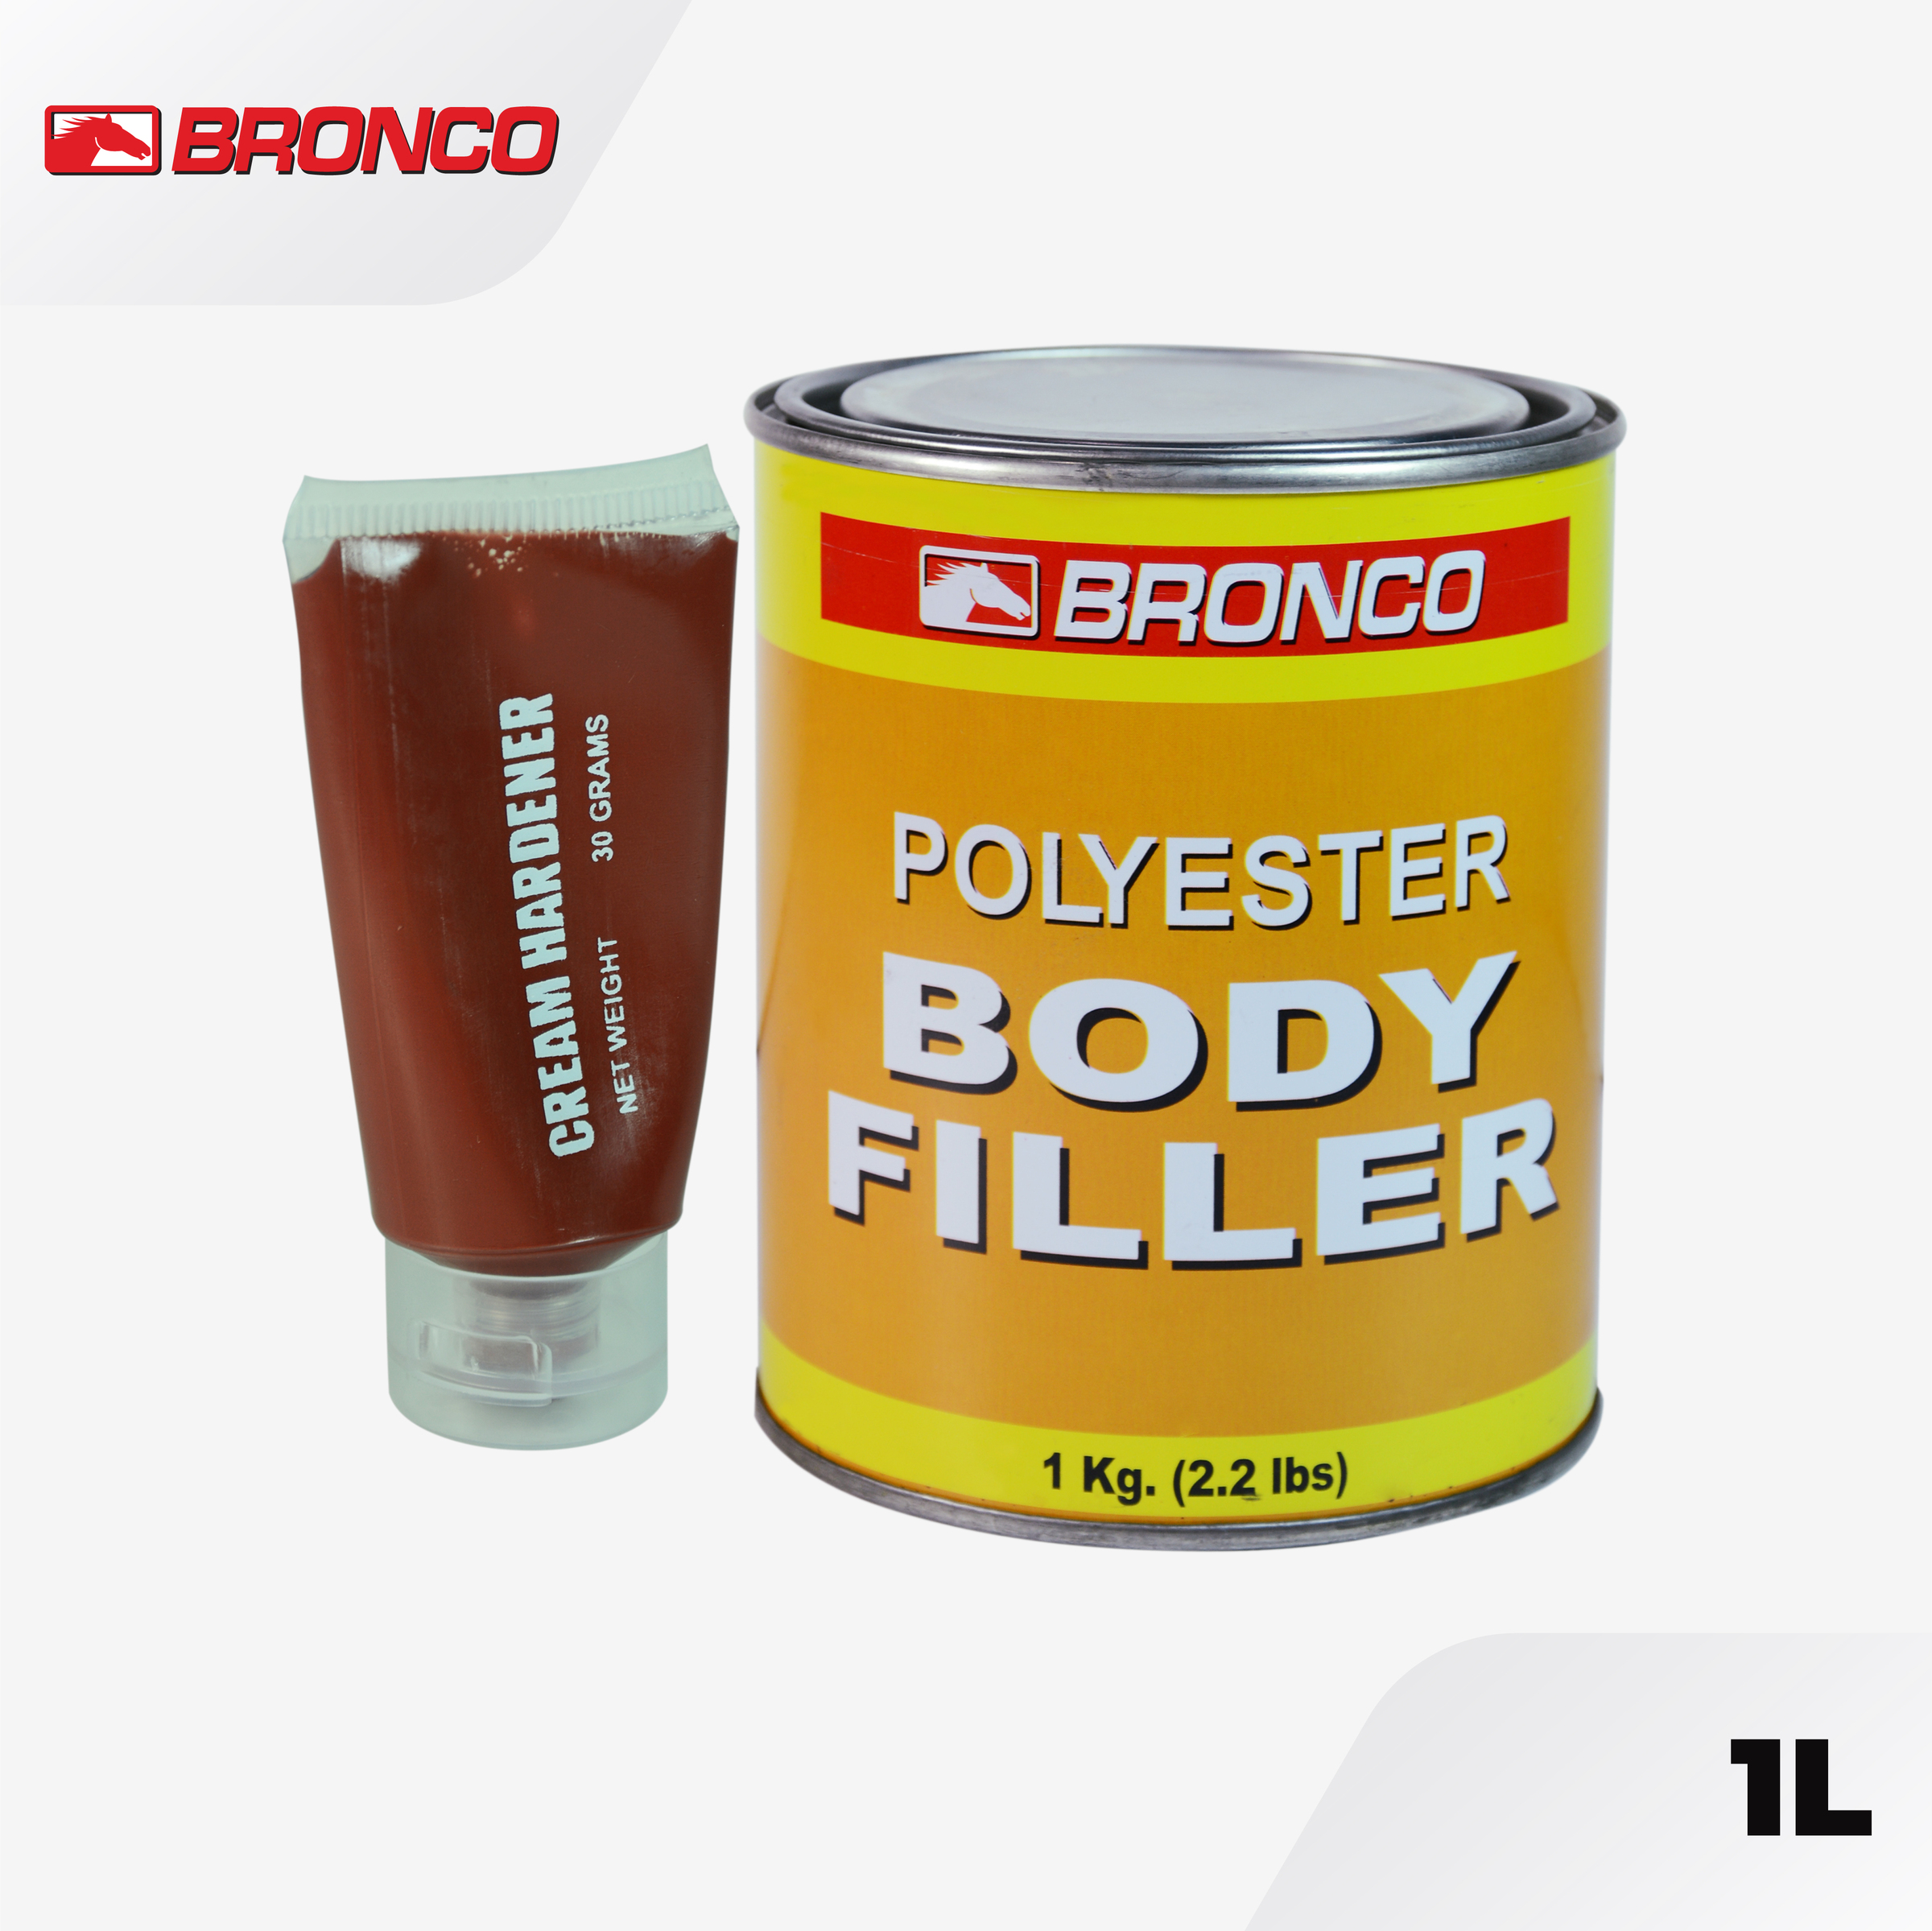 Bronco Polyester Body Filler